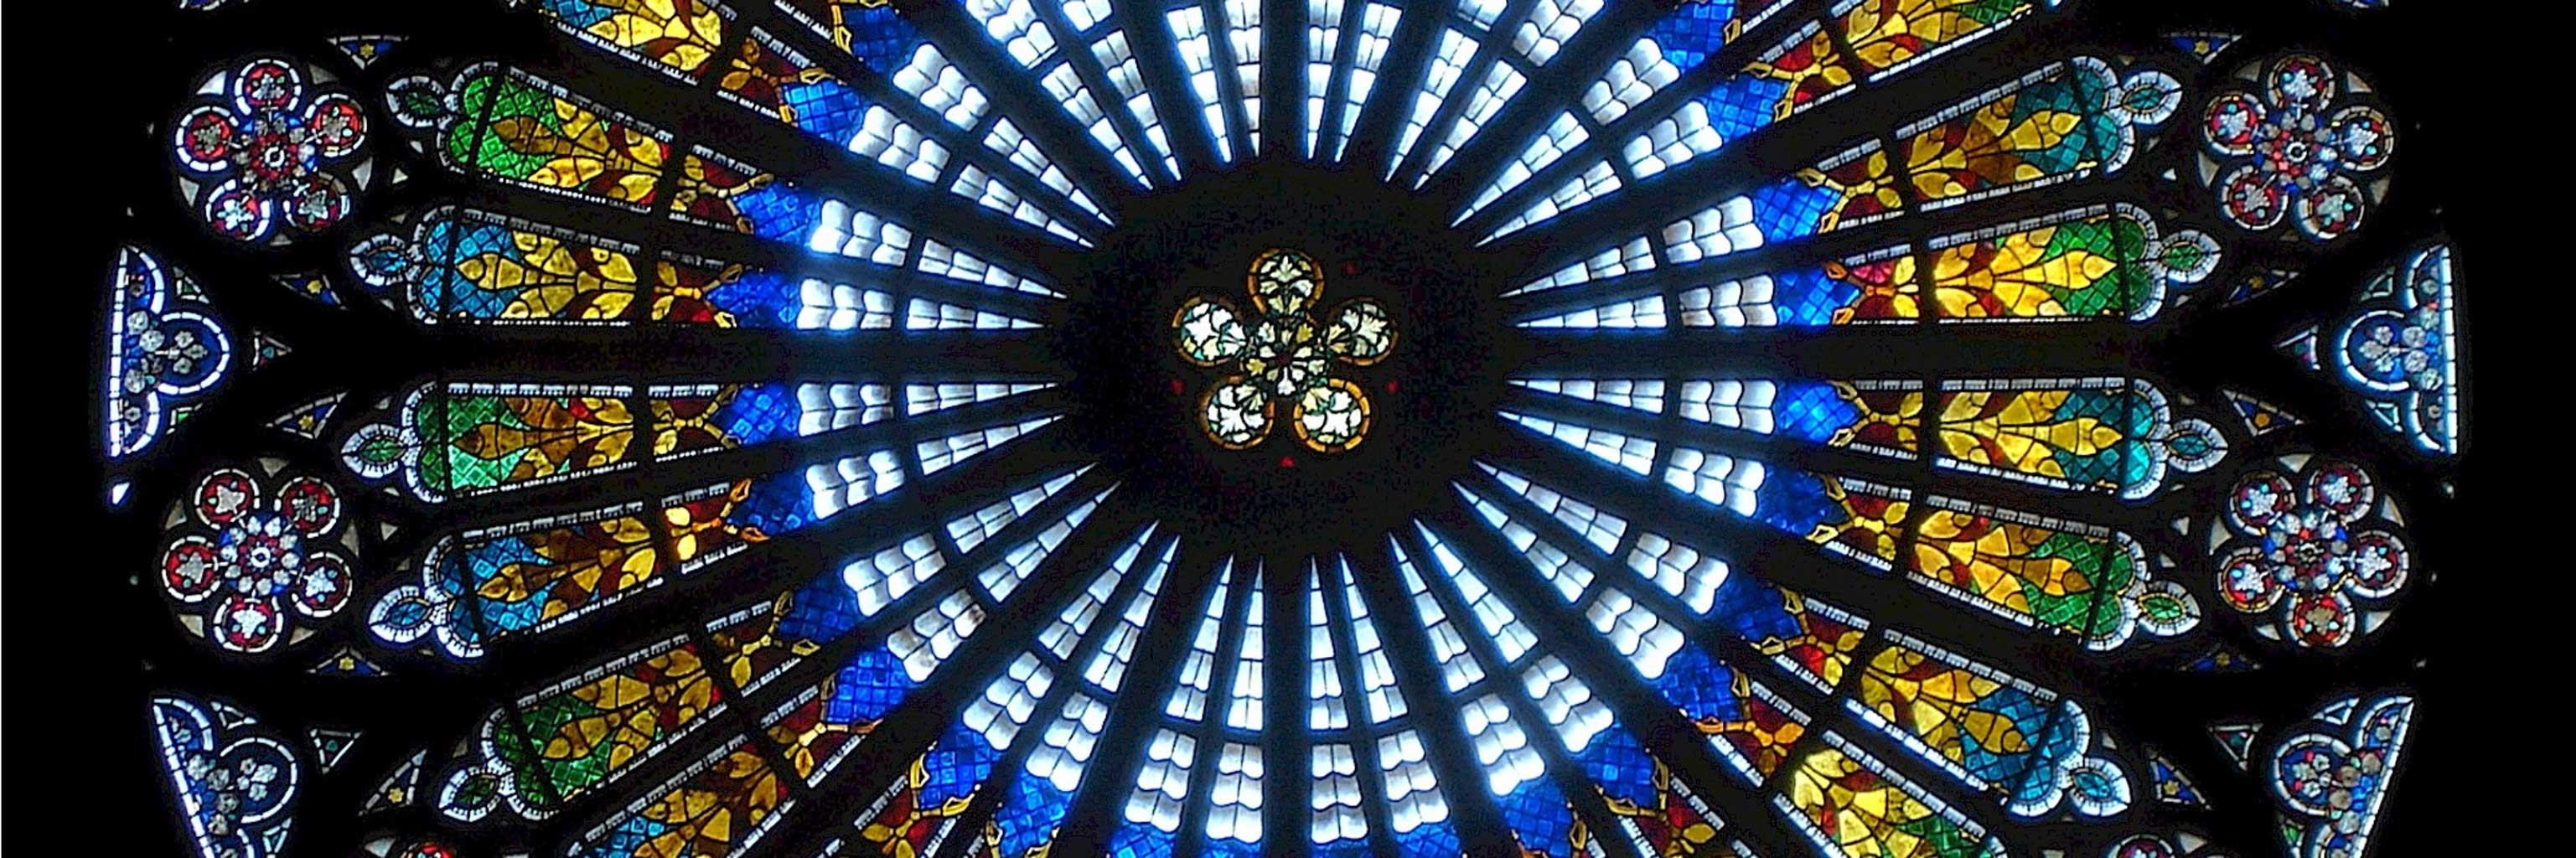 Rose window at Strasbourg Cathedral, Strasbourg, France